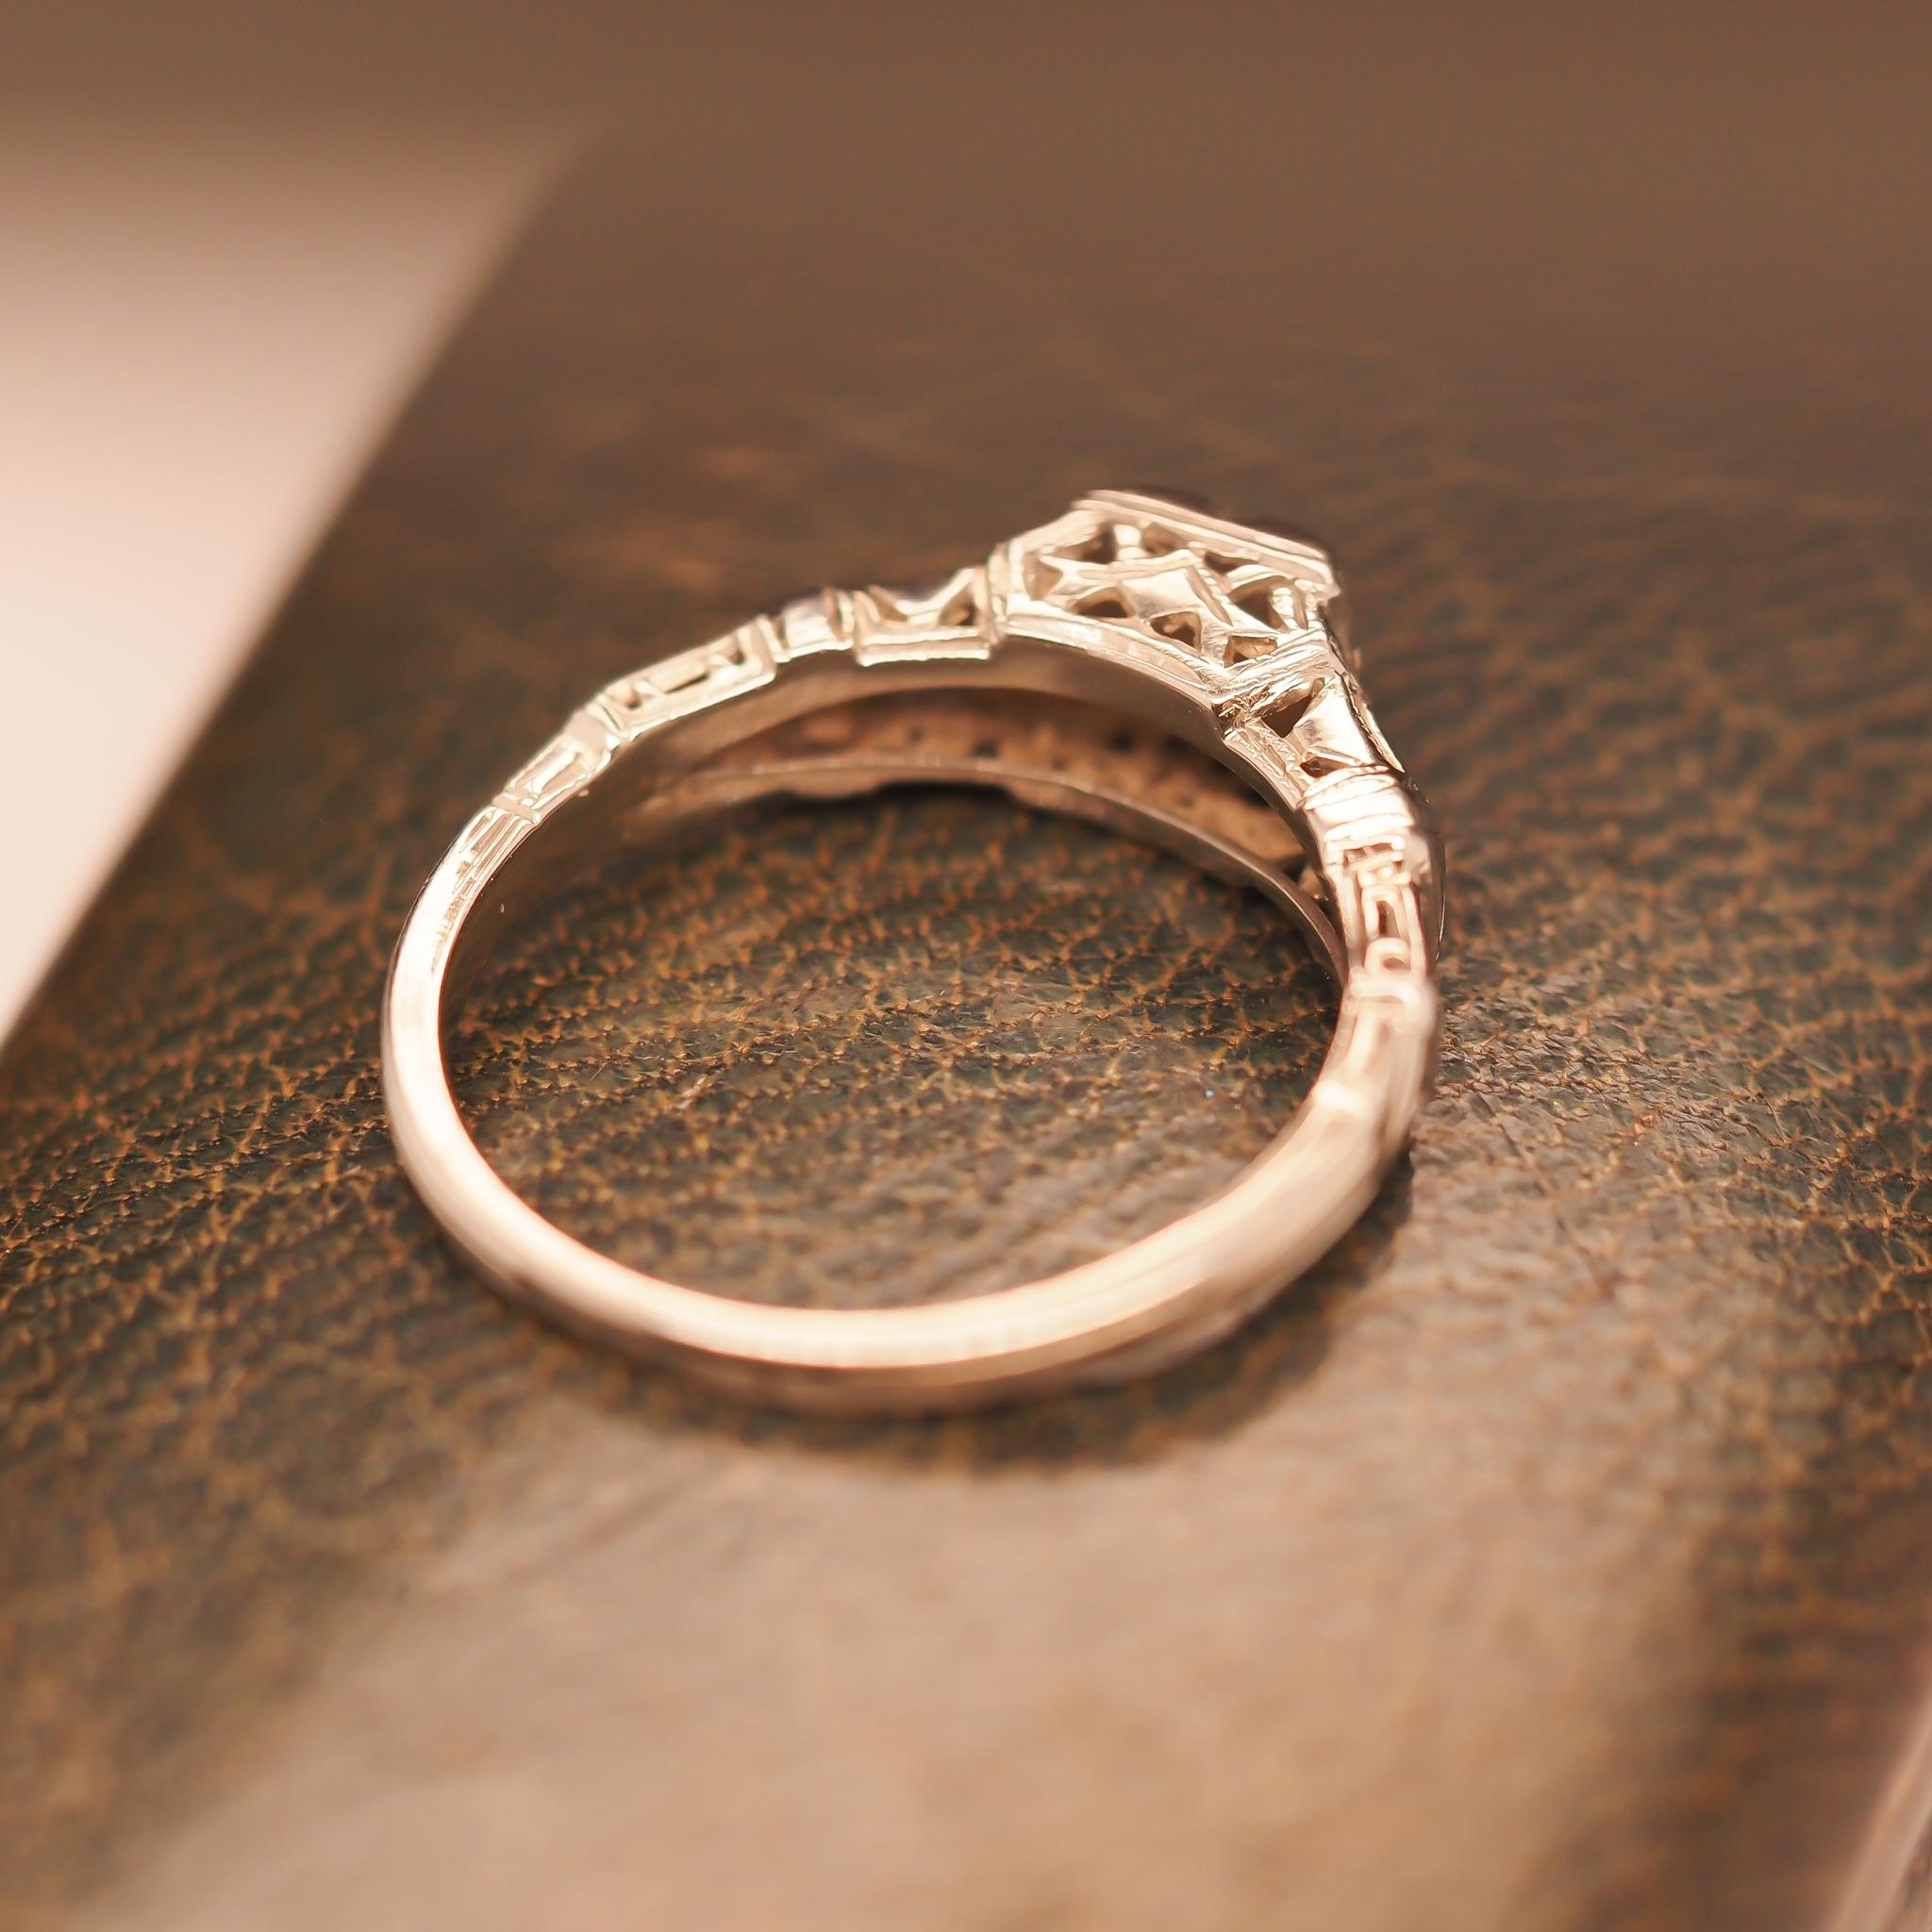 Circa 1930s 18K White Gold “Romance” Diamond Filigree Ring For Sale 2